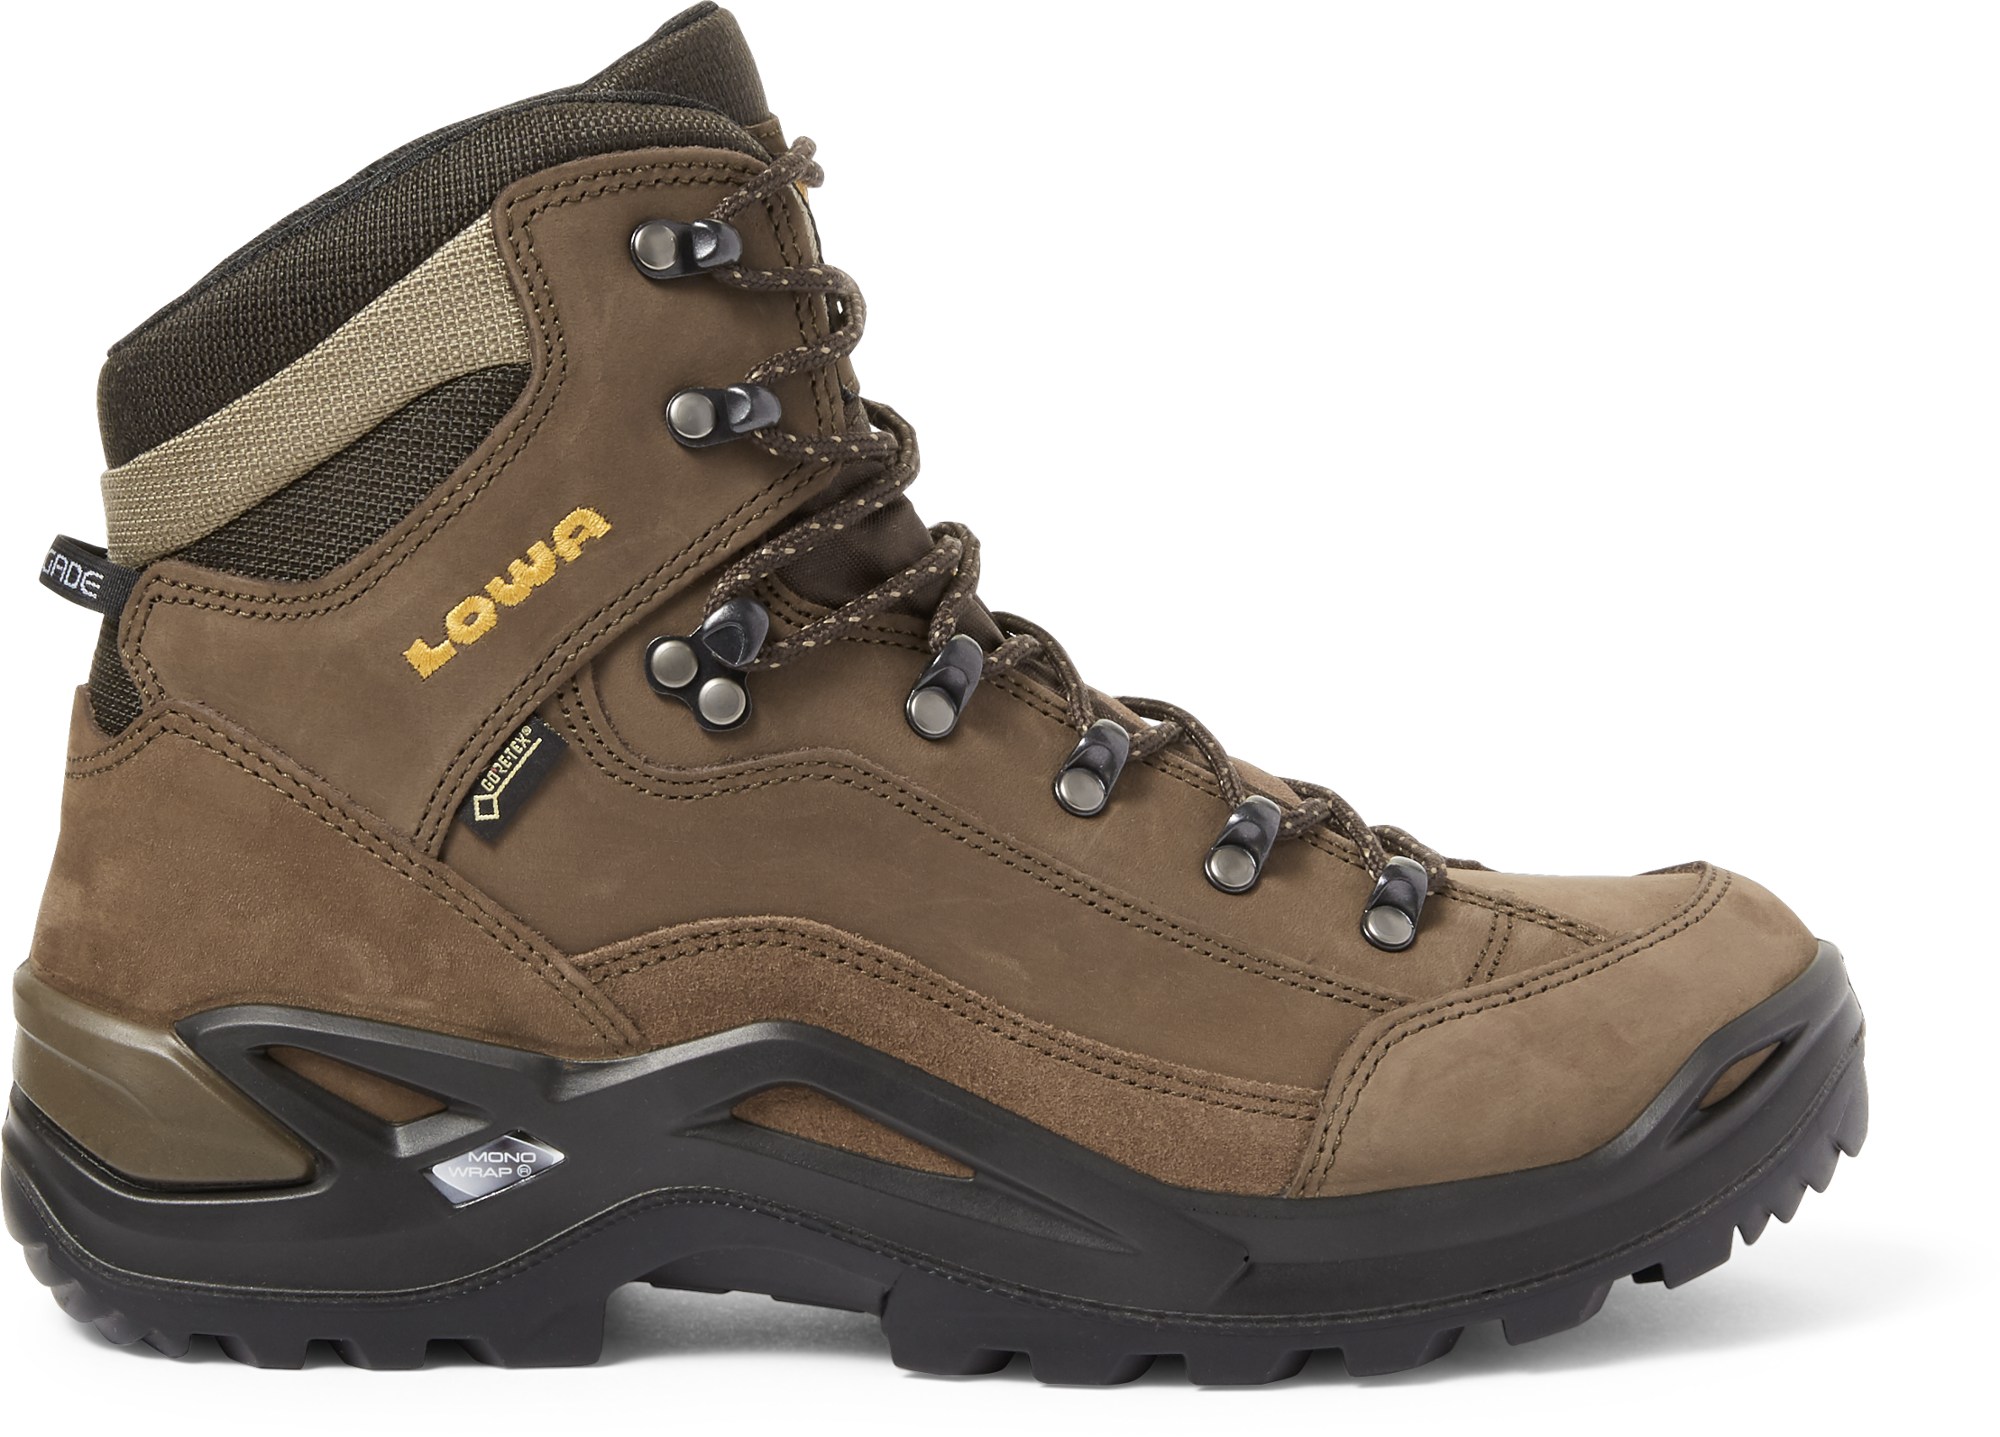 REI Anniversary Sale (Lowa Renegade Mid GTX hiking boots)